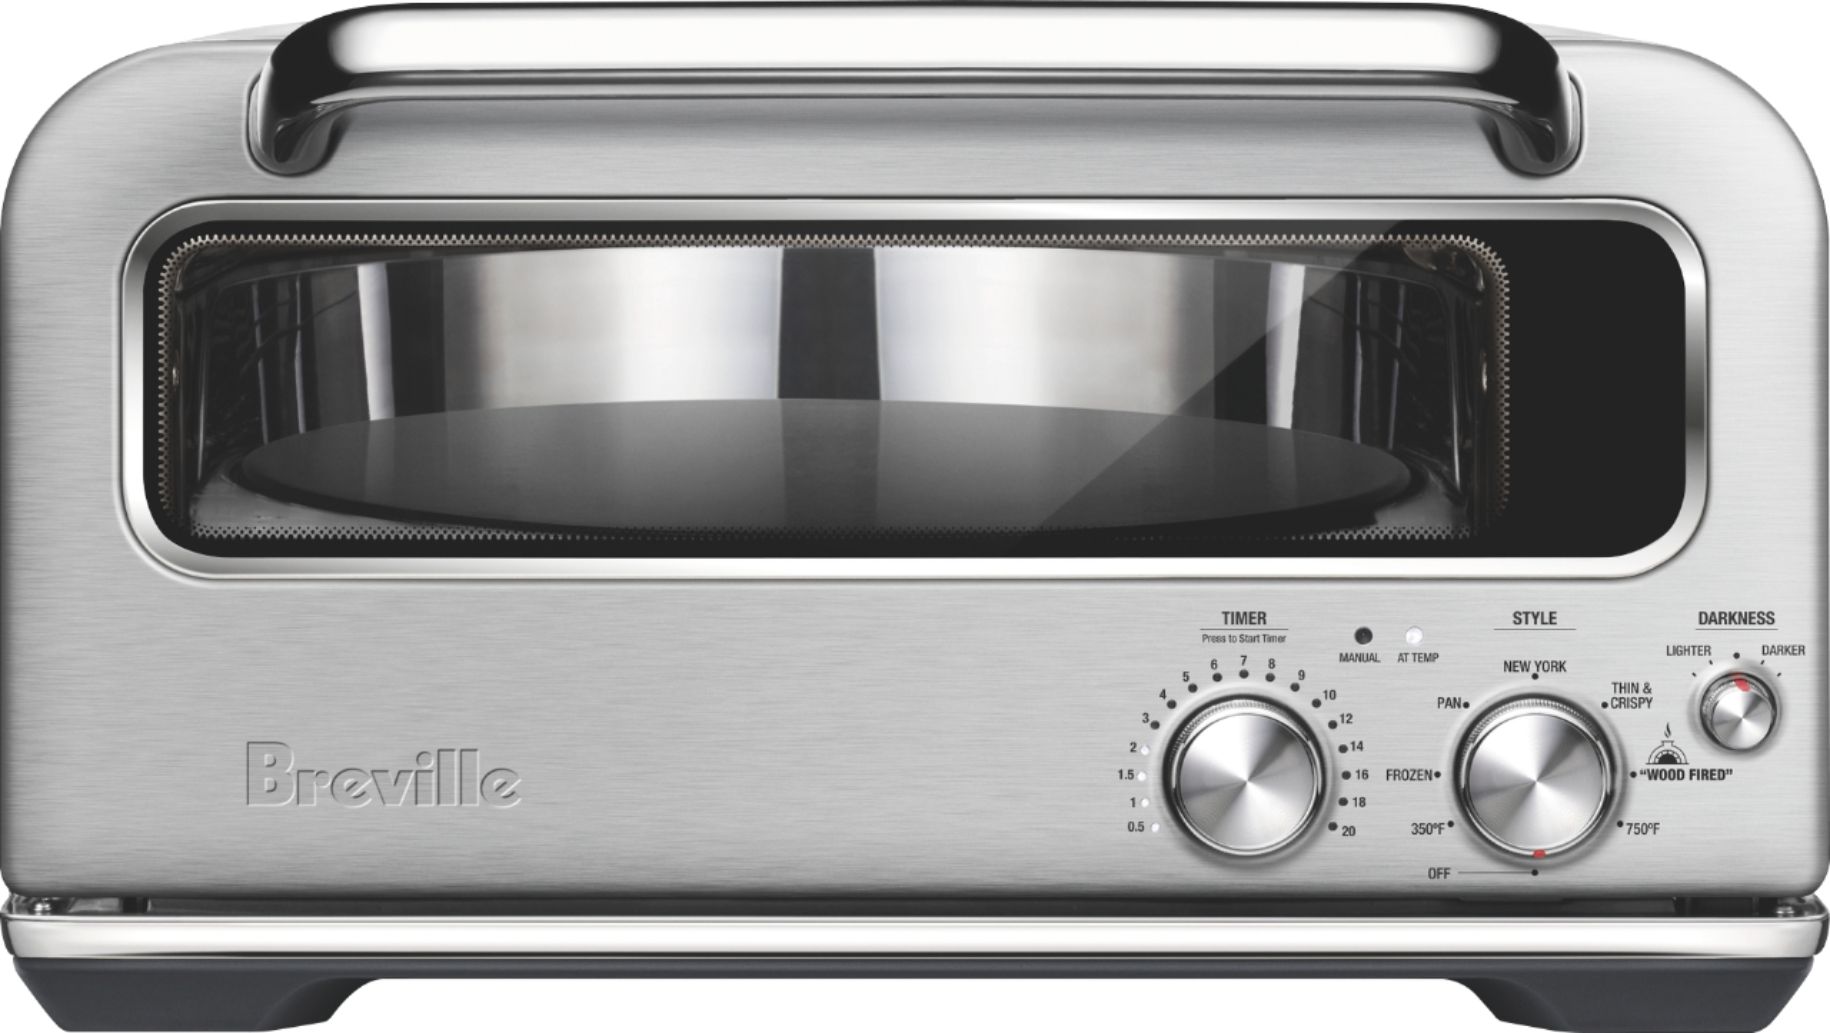 Wolf Countertop Oven vs Breville Smart Oven